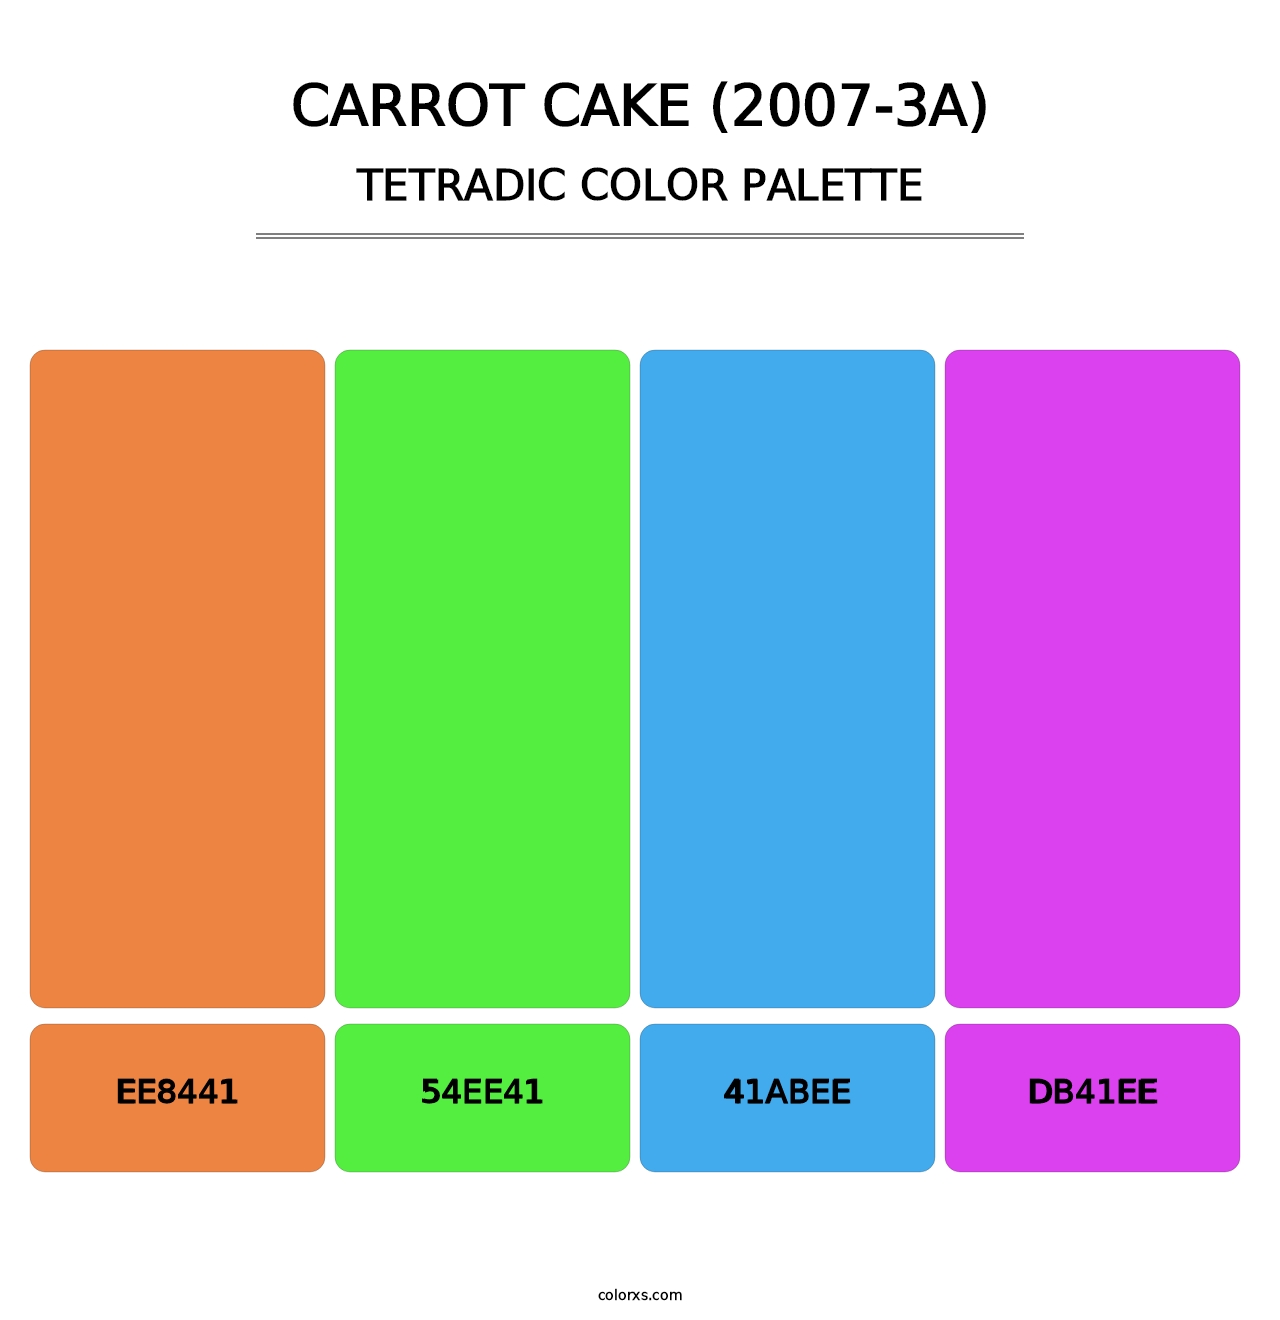 Carrot Cake (2007-3A) - Tetradic Color Palette